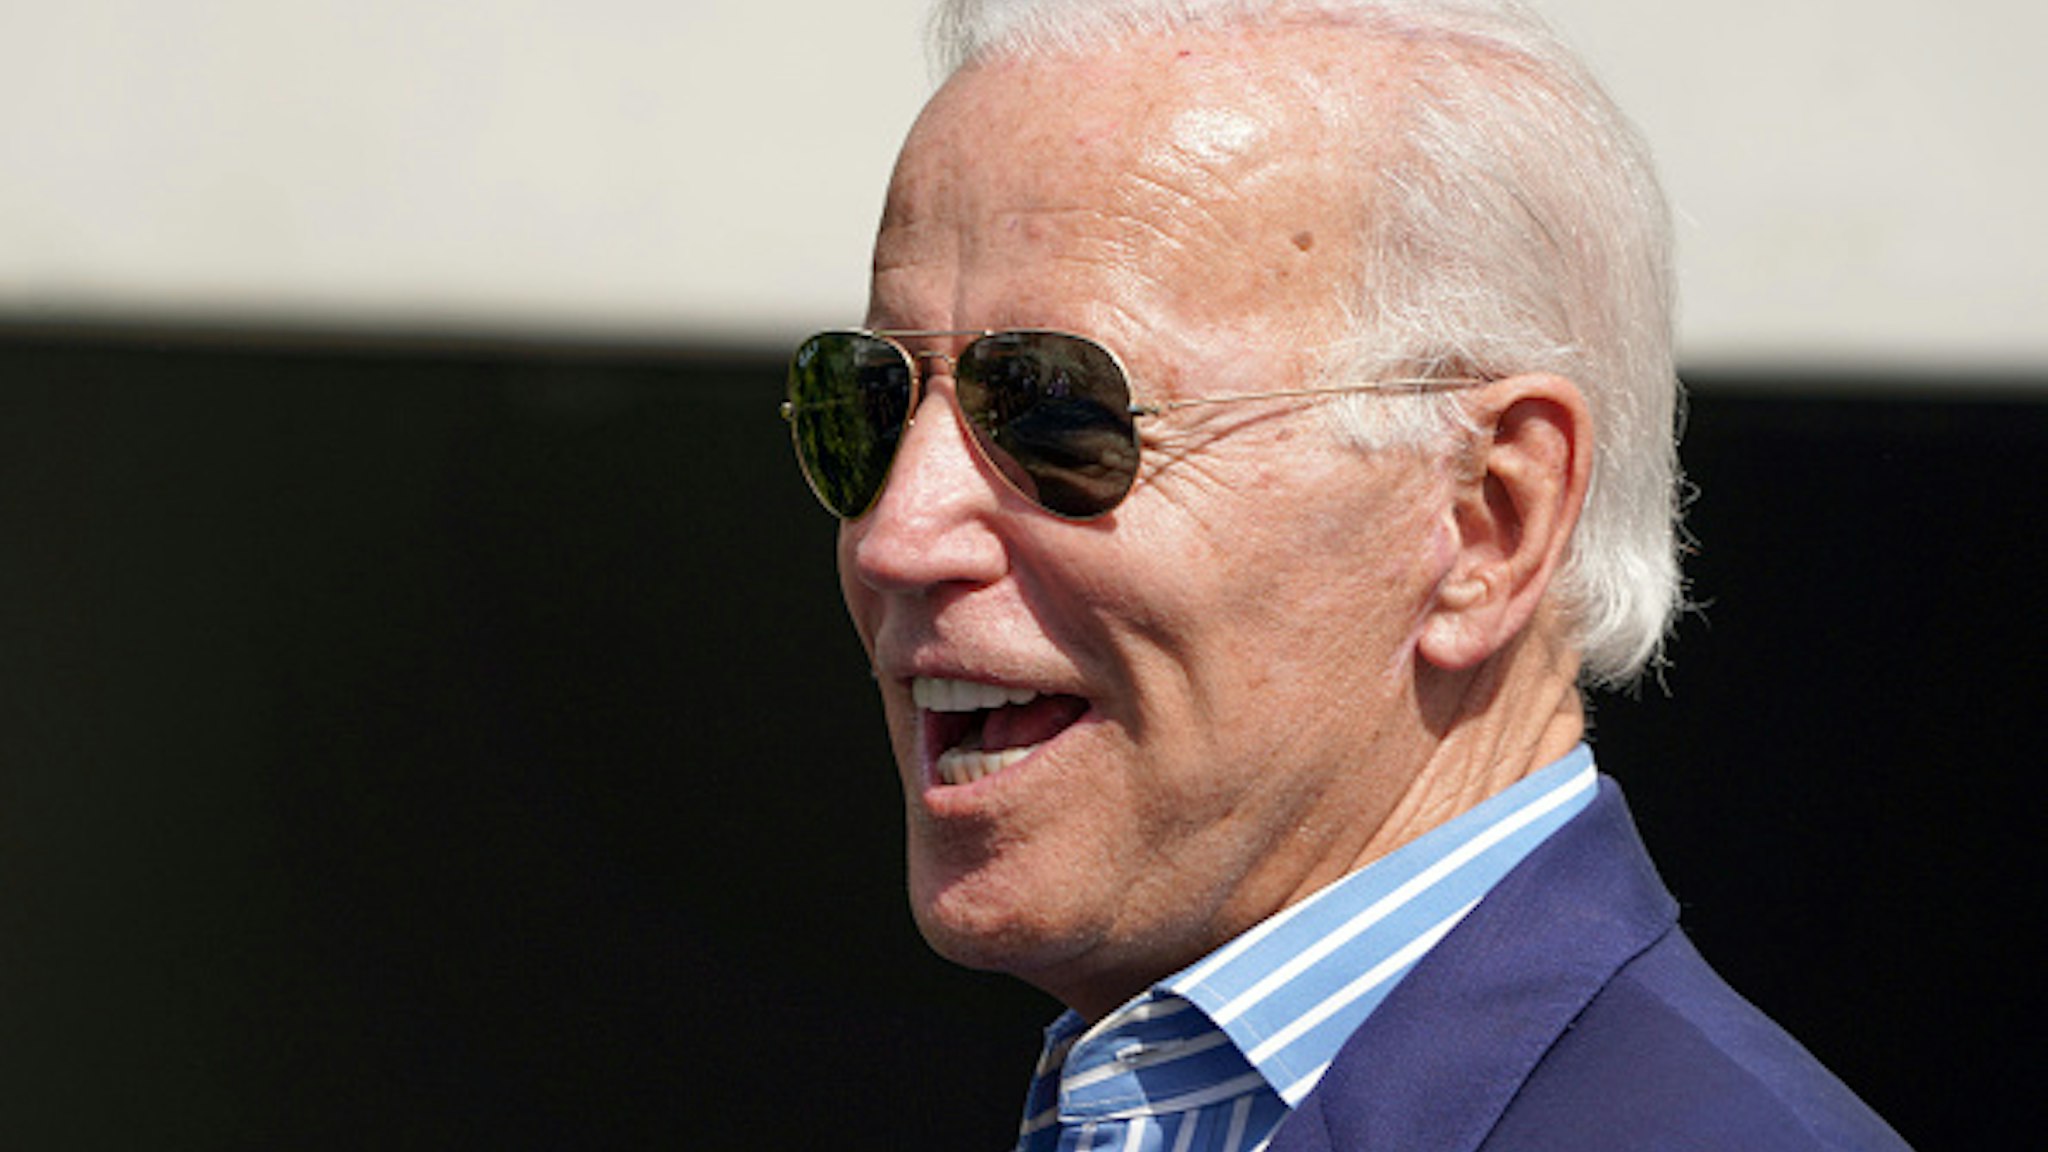 MANHATTAN BEACH, CA - SEPTEMBER 25: Presidential candidate Joe Biden leaves a private fundraiser at a home in Manhattan Beach on Wednesday, Sep. 25, 2019.